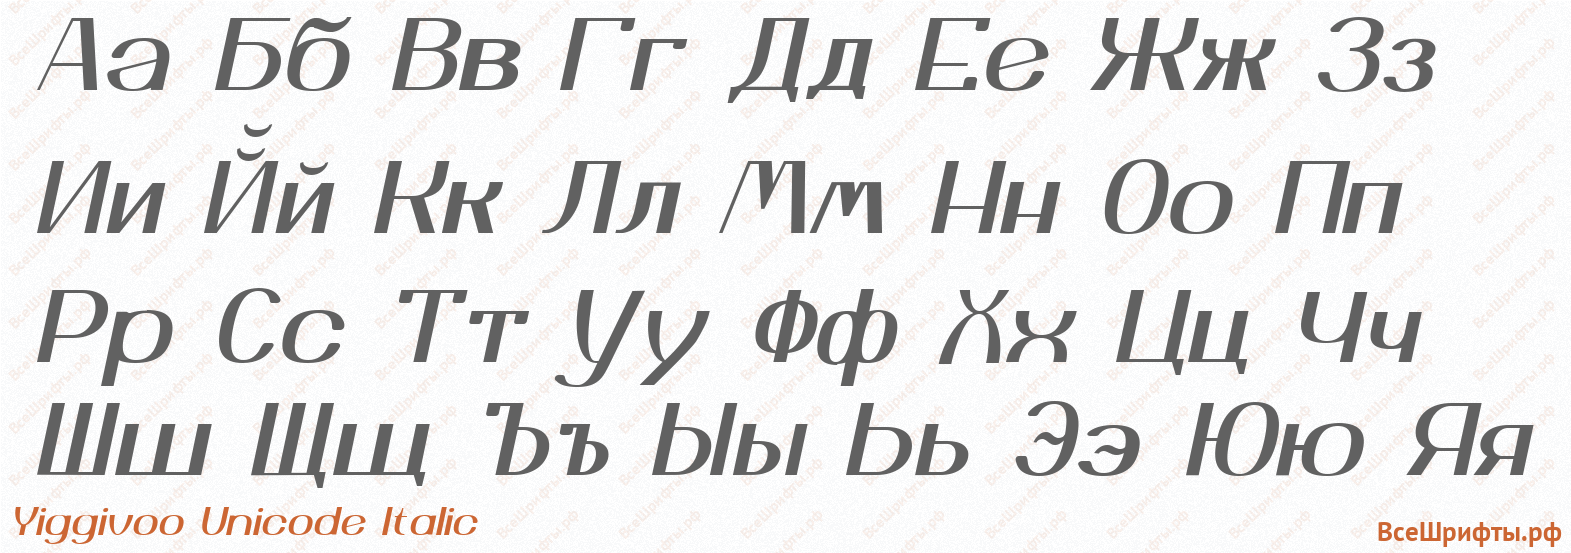 Шрифт Yiggivoo Unicode Italic с русскими буквами